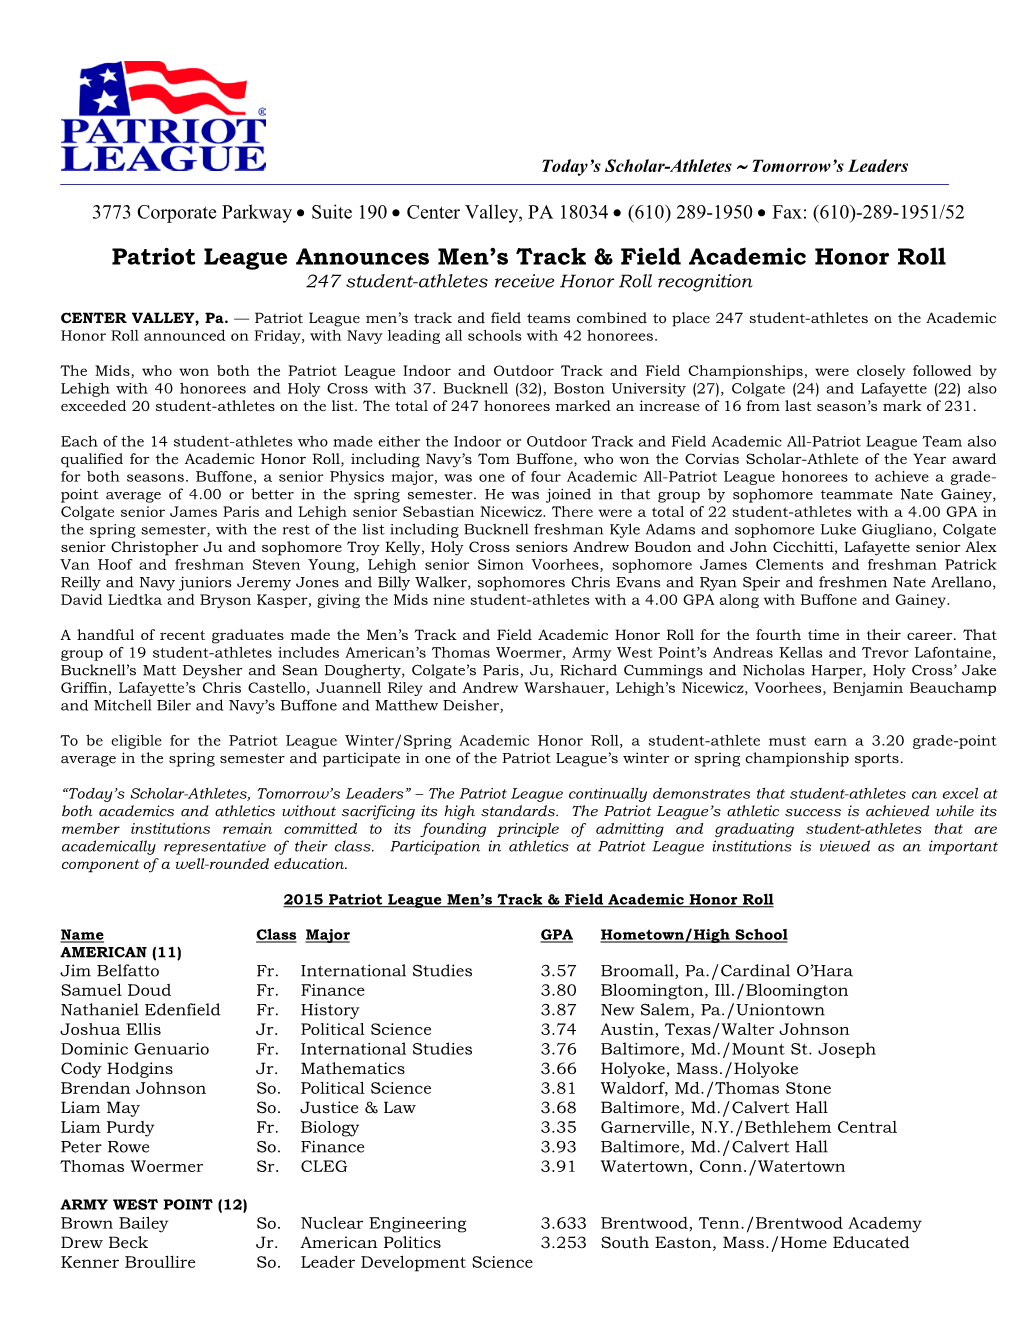 Patriot League Announces Men's Track & Field Academic Honor Roll